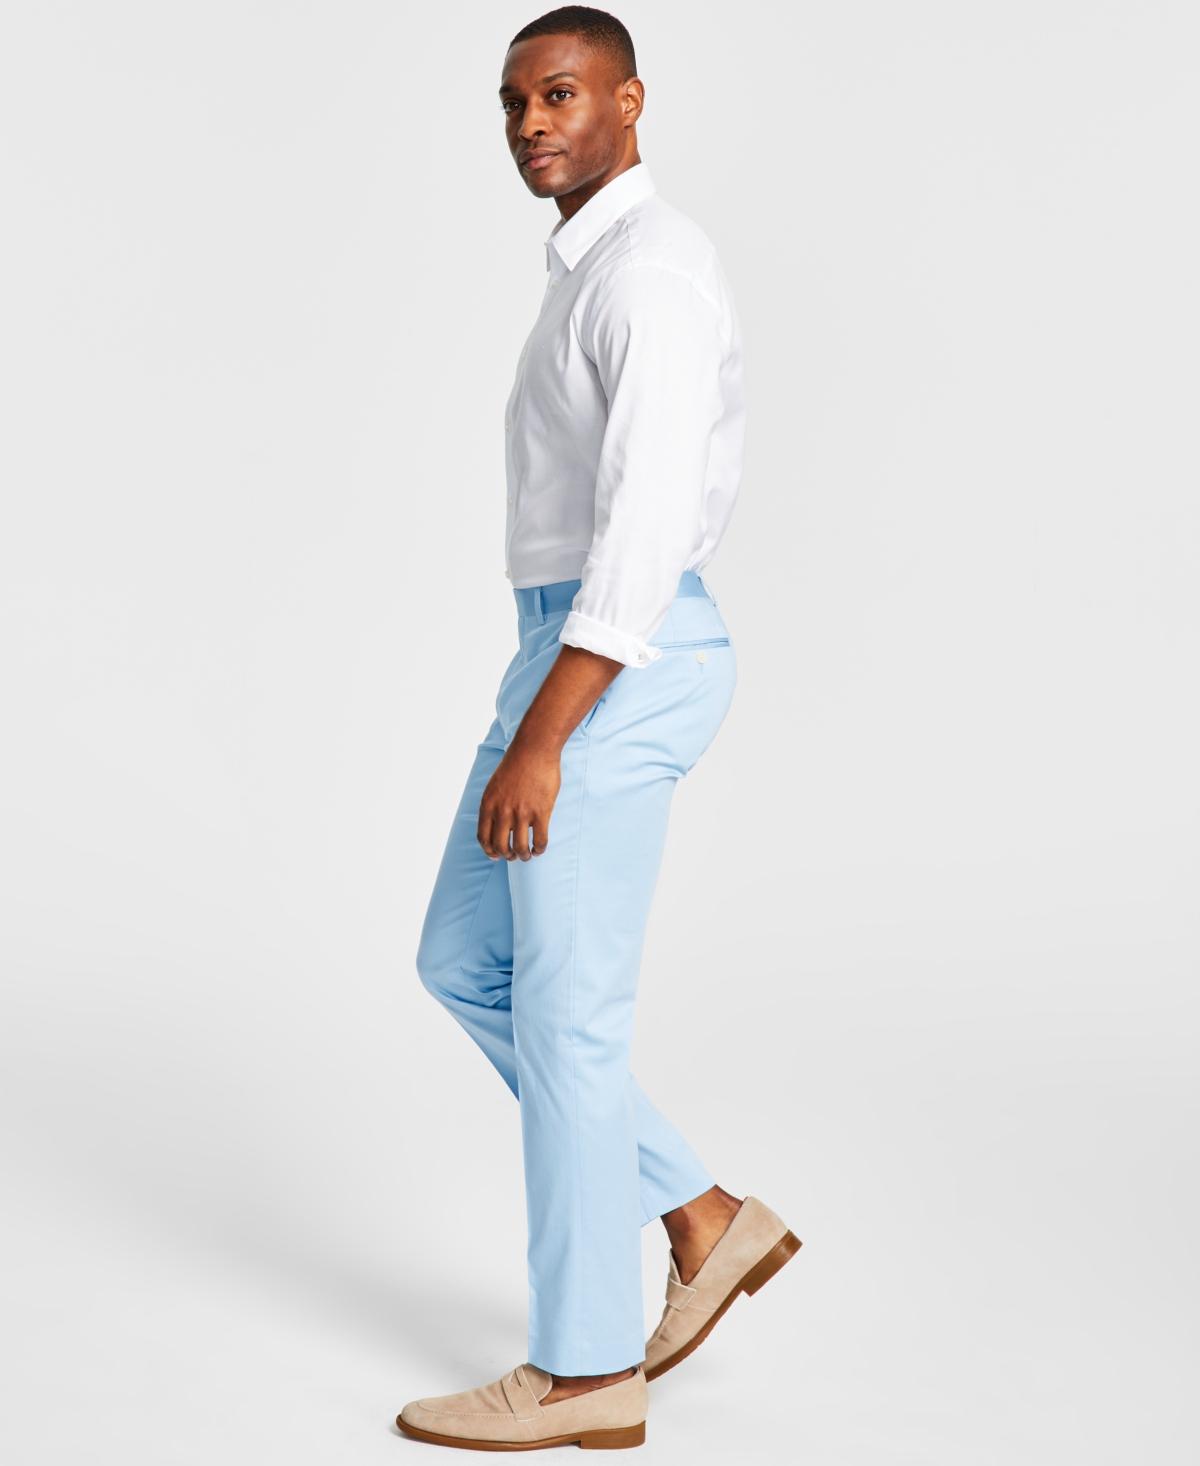 Men's Casual Cotton Slim Fit Formal Wedding Business Dress Pants 36 / White  | Slim fit formal pants, Mens dress pants, Men's business suits